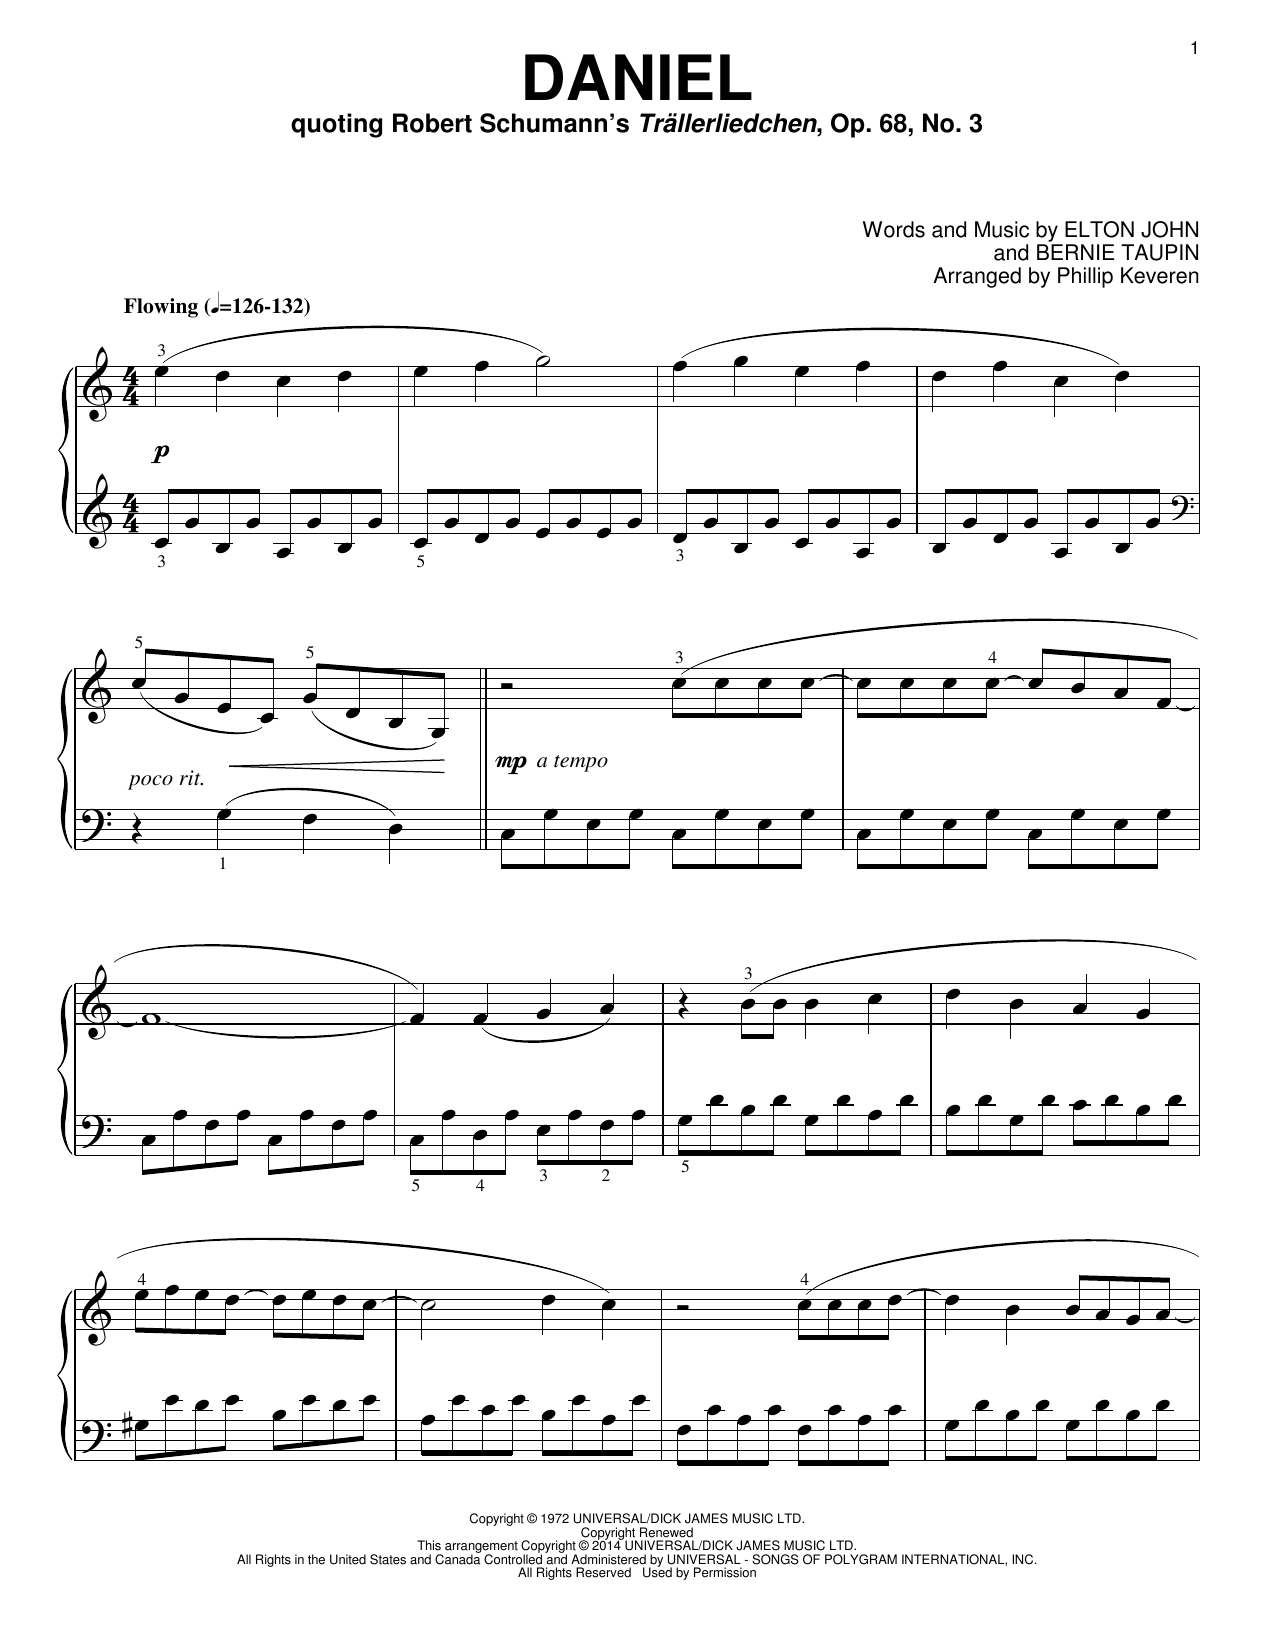 Elton John Daniel [Classical version] (arr. Phillip Keveren) Sheet Music Notes & Chords for Piano - Download or Print PDF